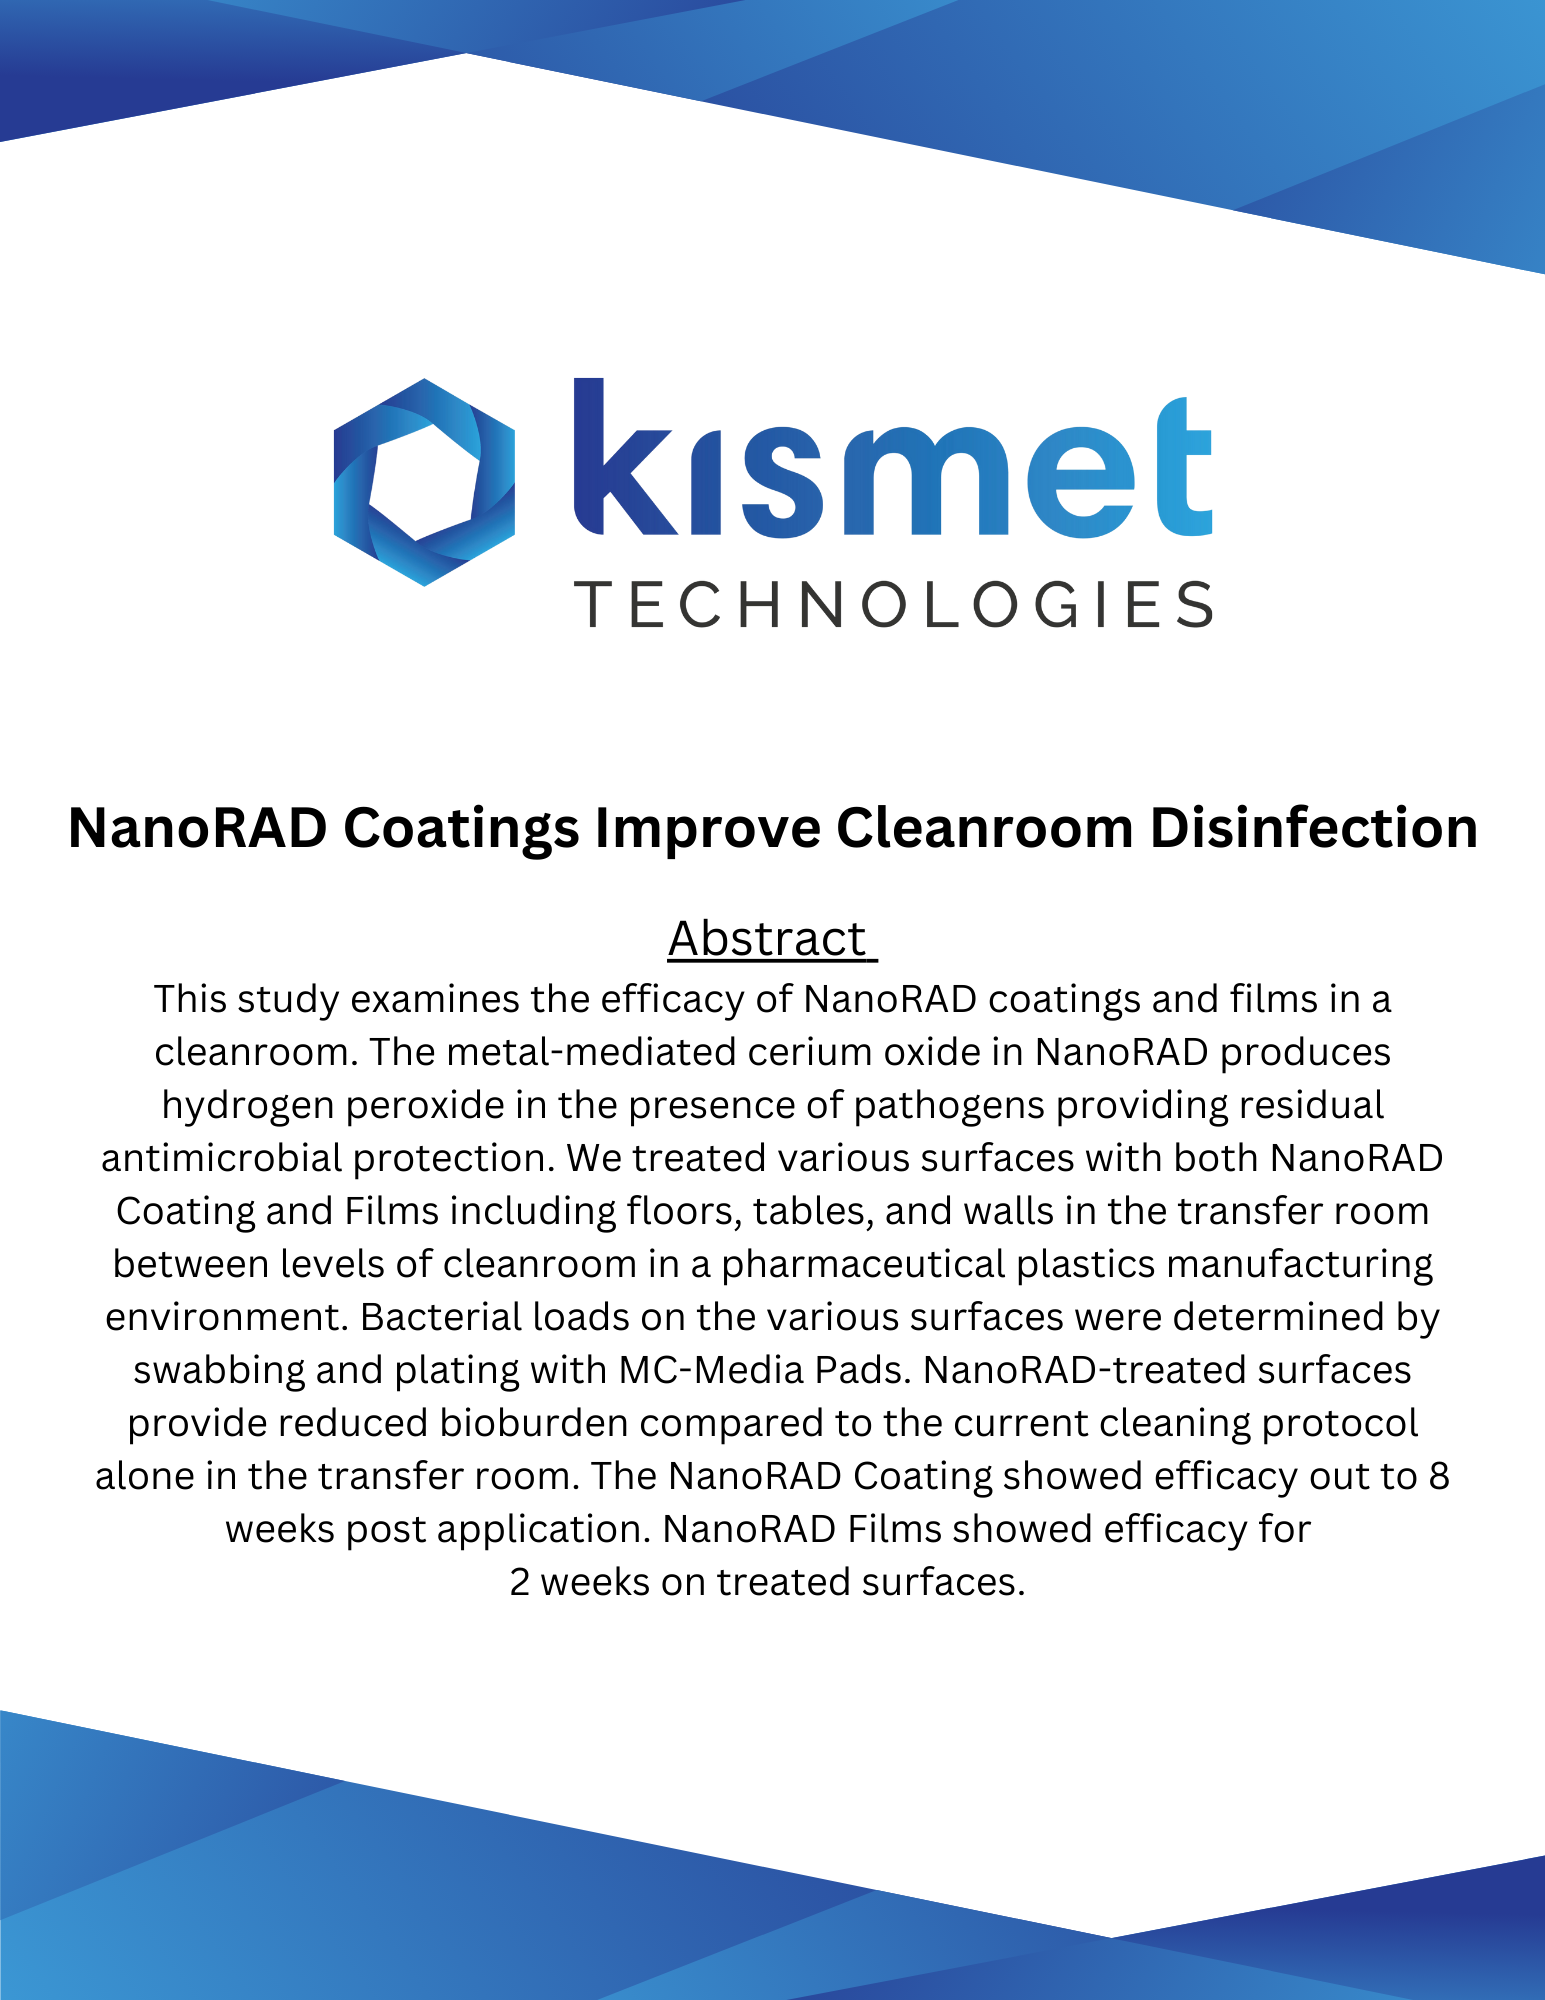 Kismet Technologies Coatings Improve Cleanroom Disinfection